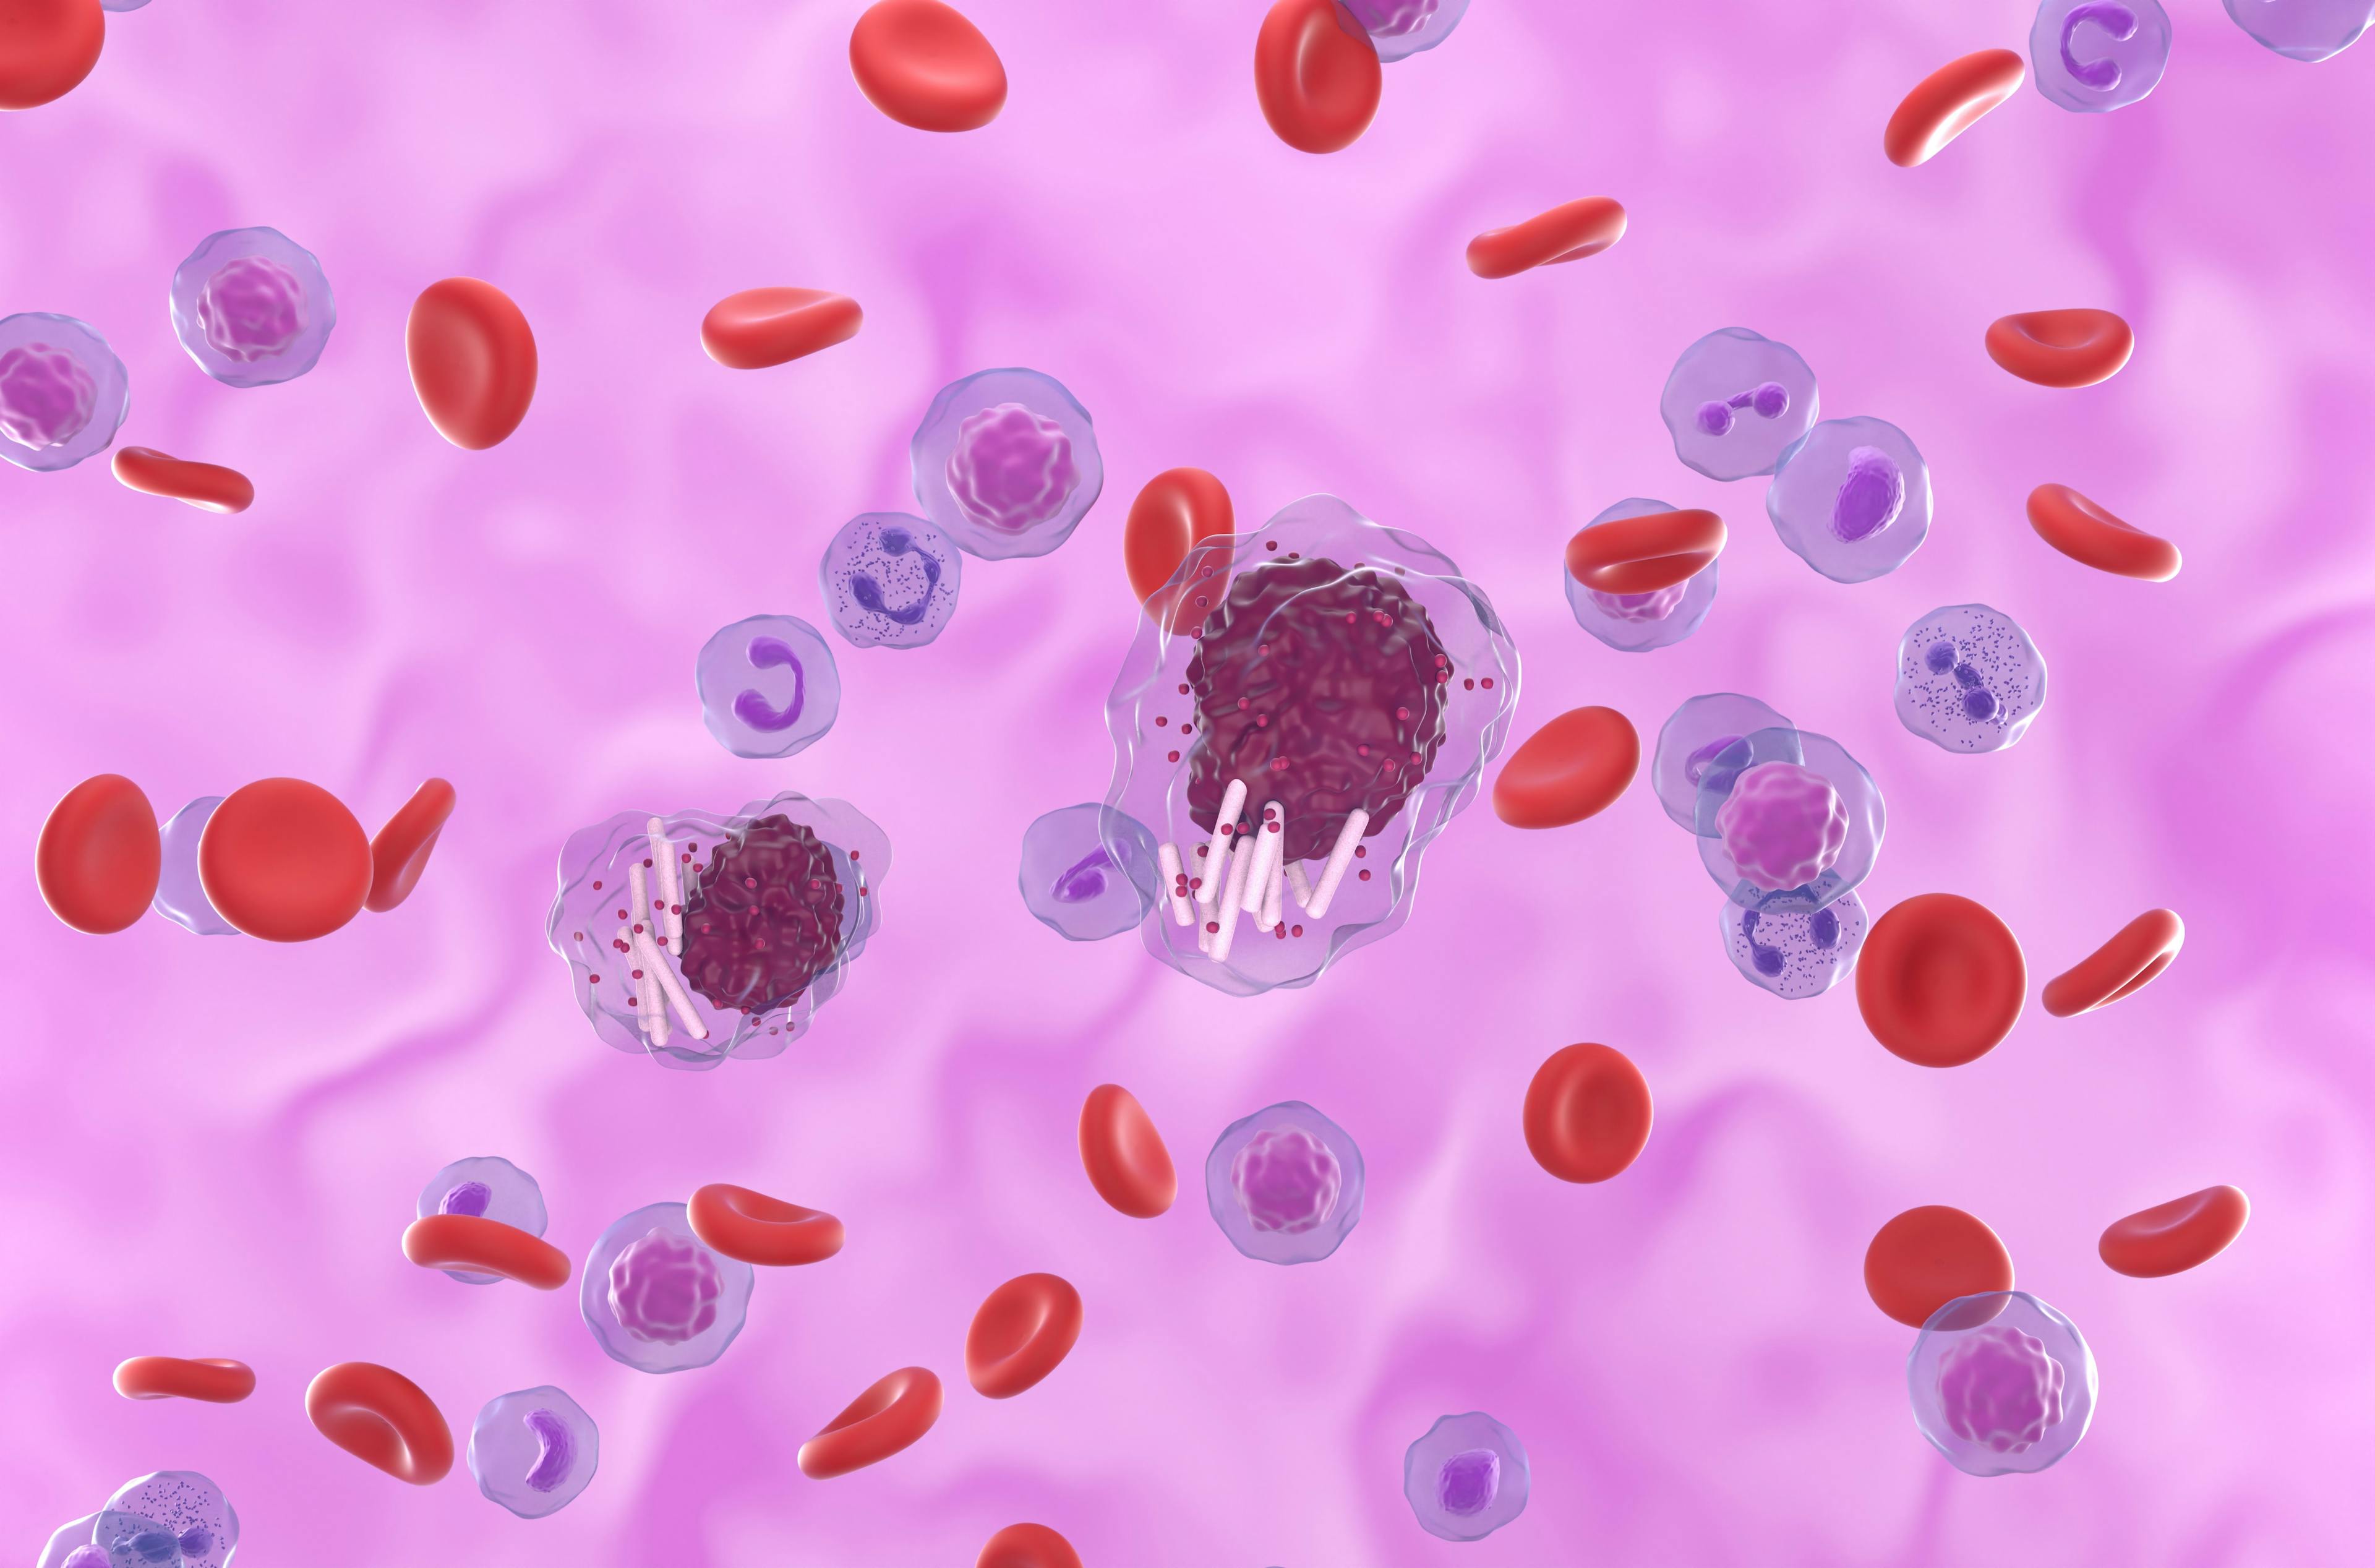 Chronic lymphocytic leukemia cells in blood flow | Image Credit: © LASZLO - stock.adobe.com